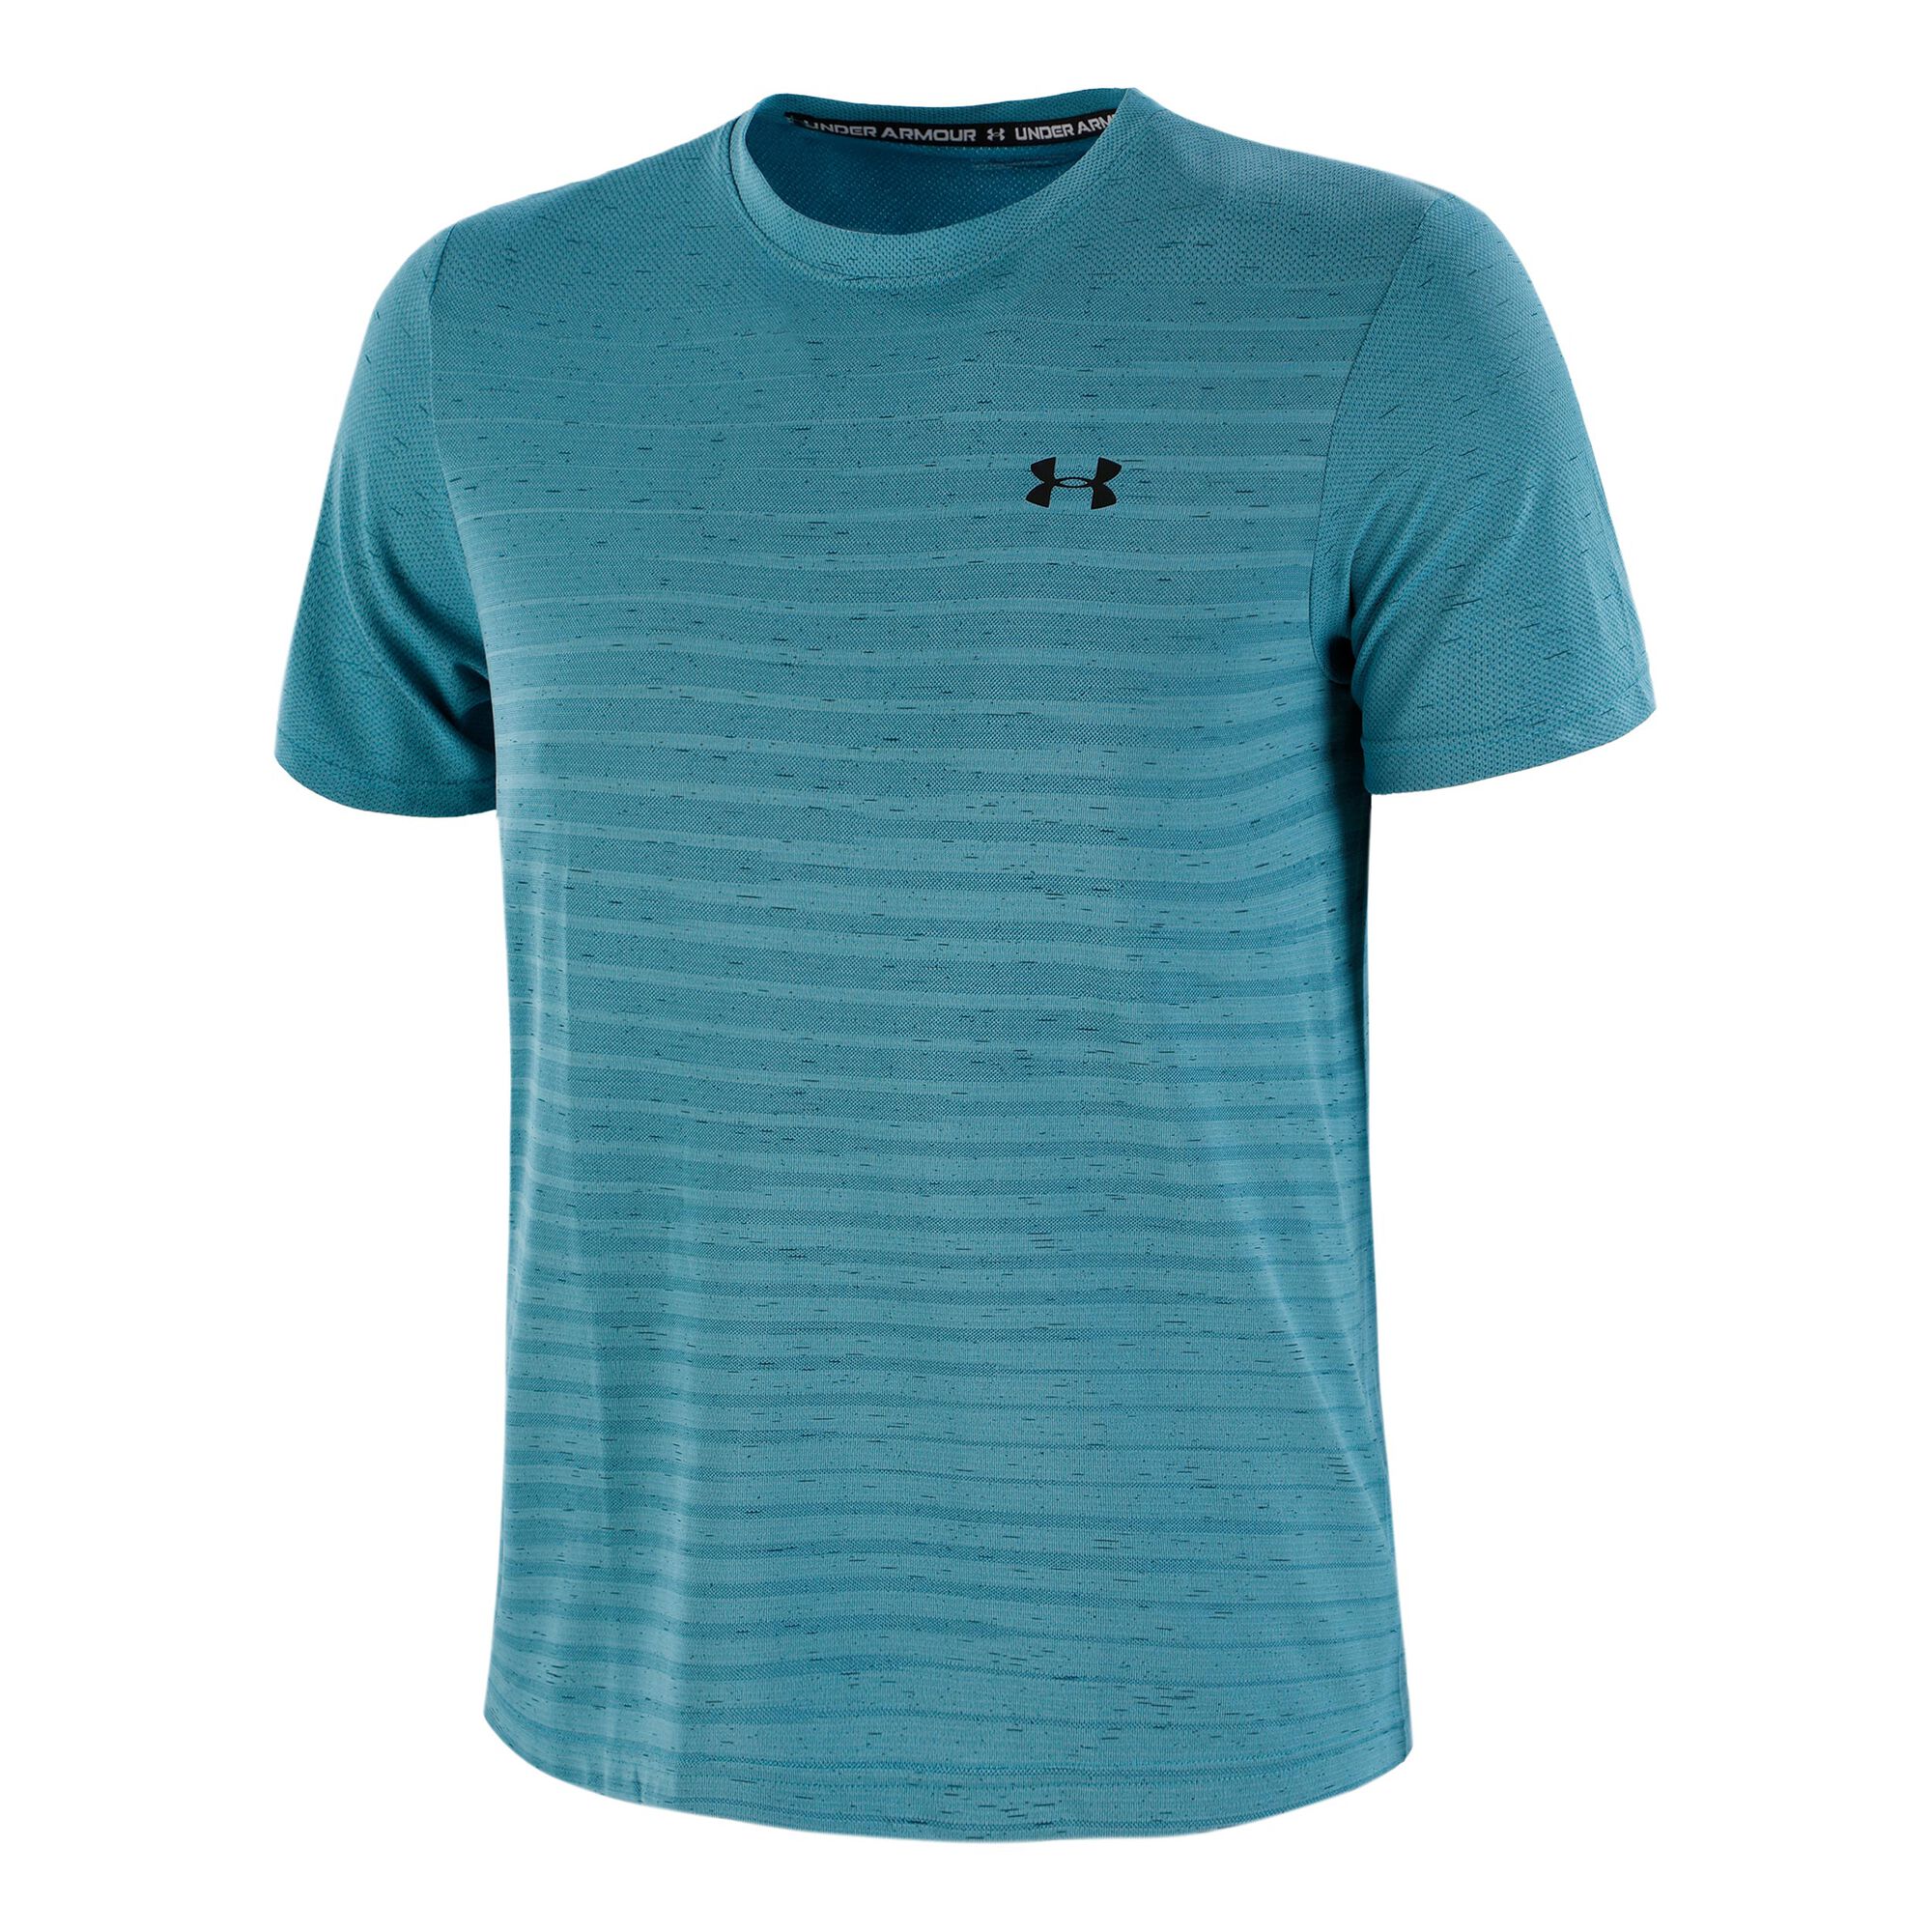 buy Under Armour Seamless Fade T-Shirt Men - Petrol online | Tennis-Point